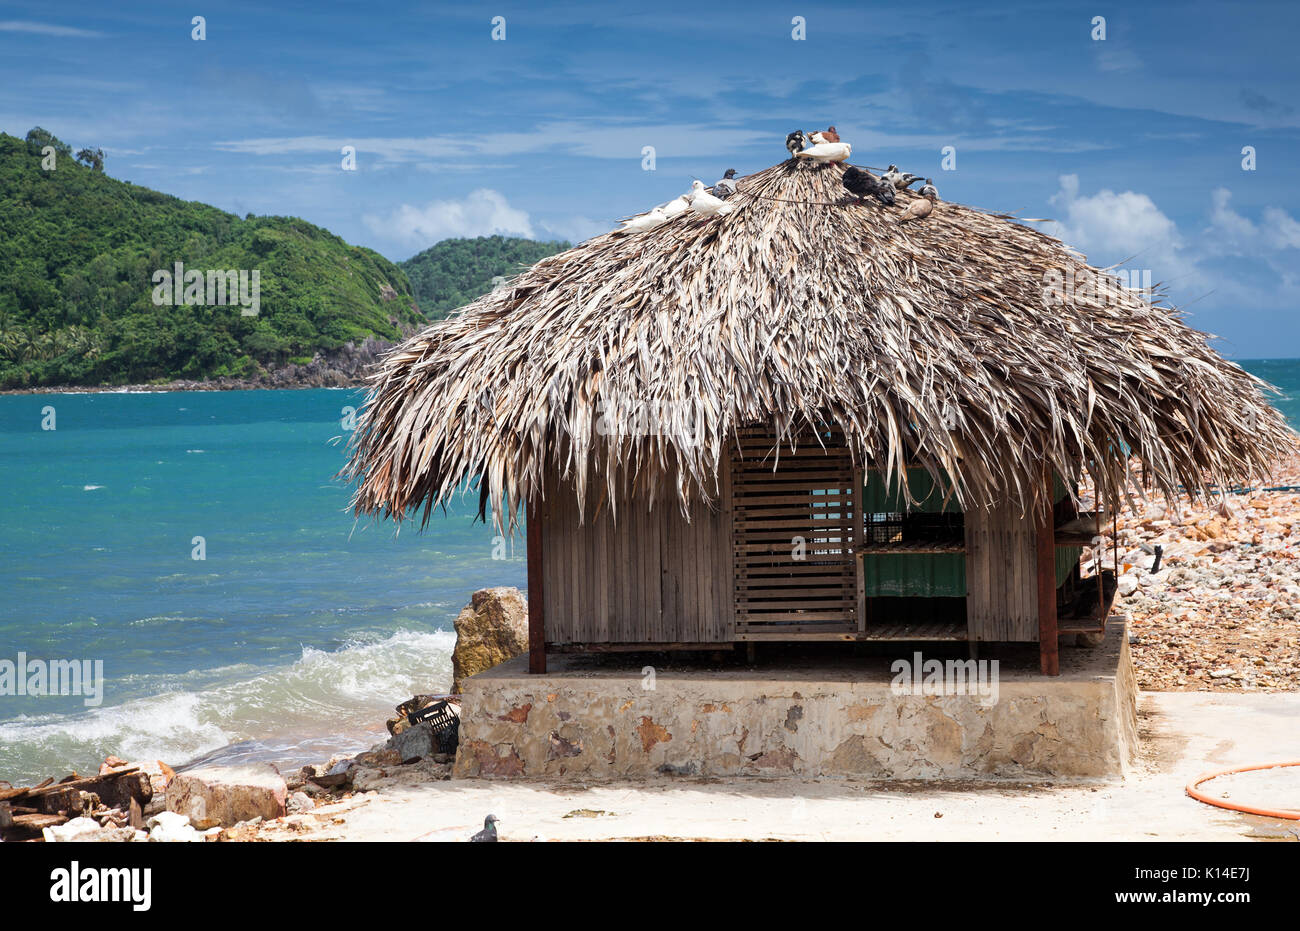 beach hut on tropical island Stock Photo